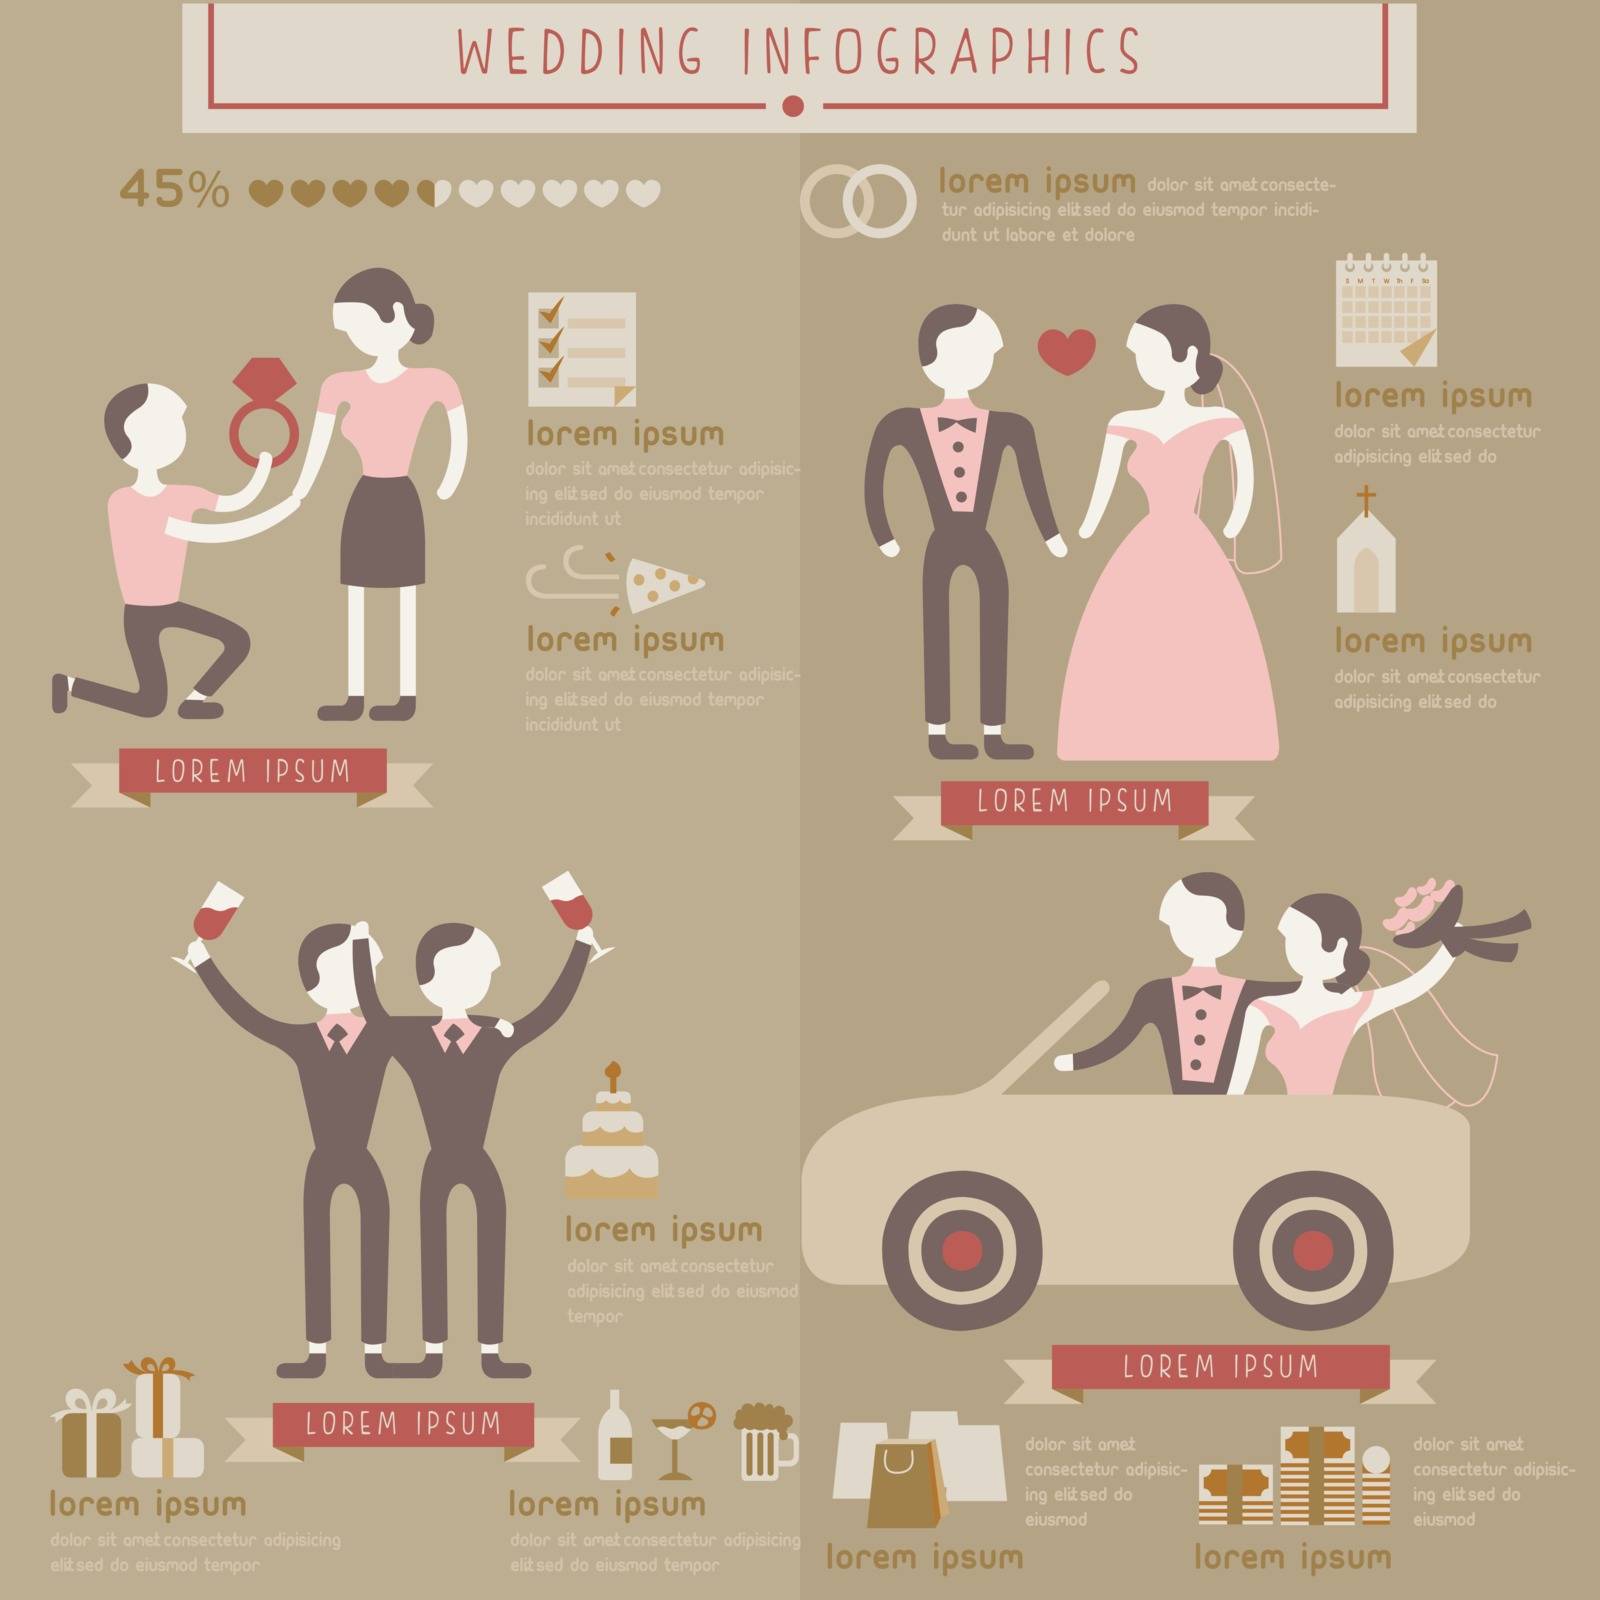 Wedding info graphic